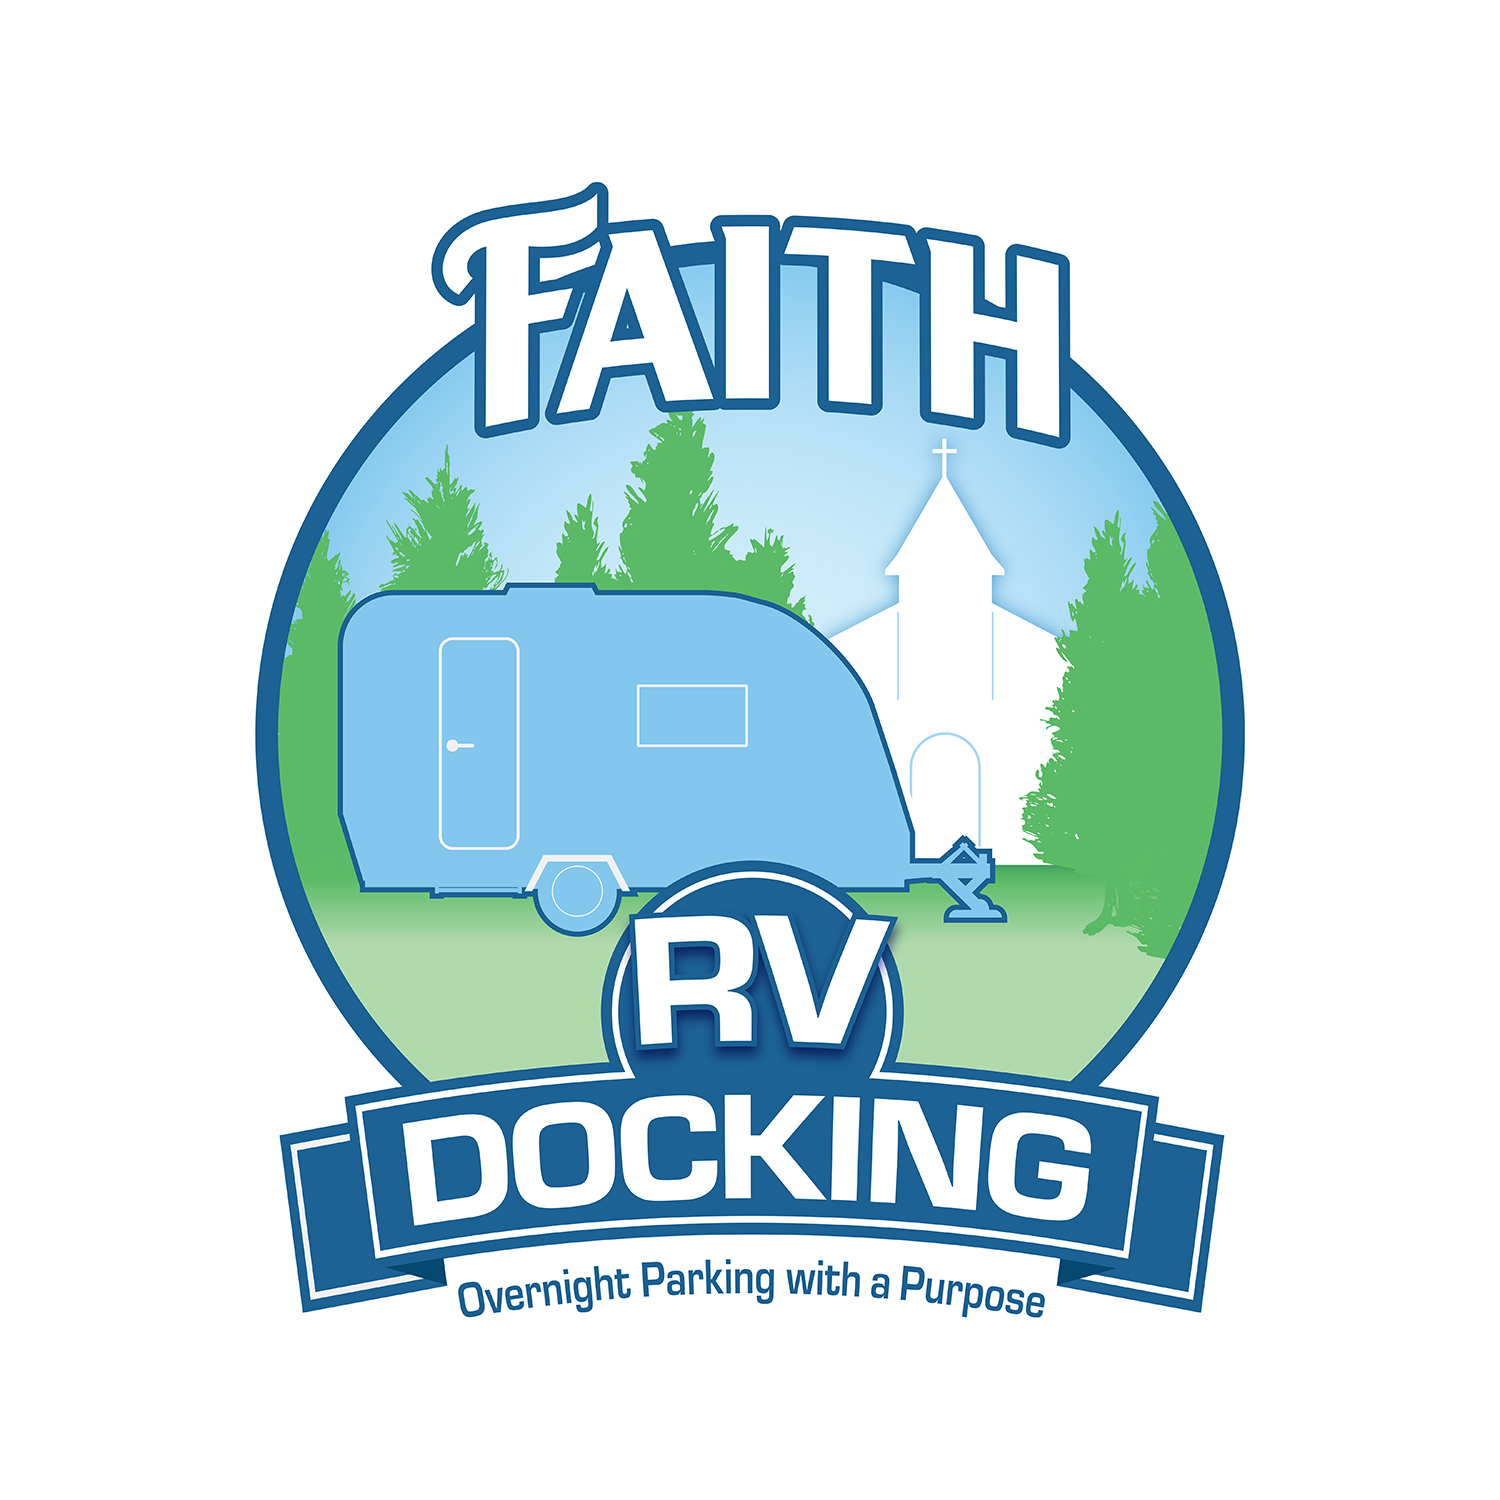 Faith RV Docking Logo